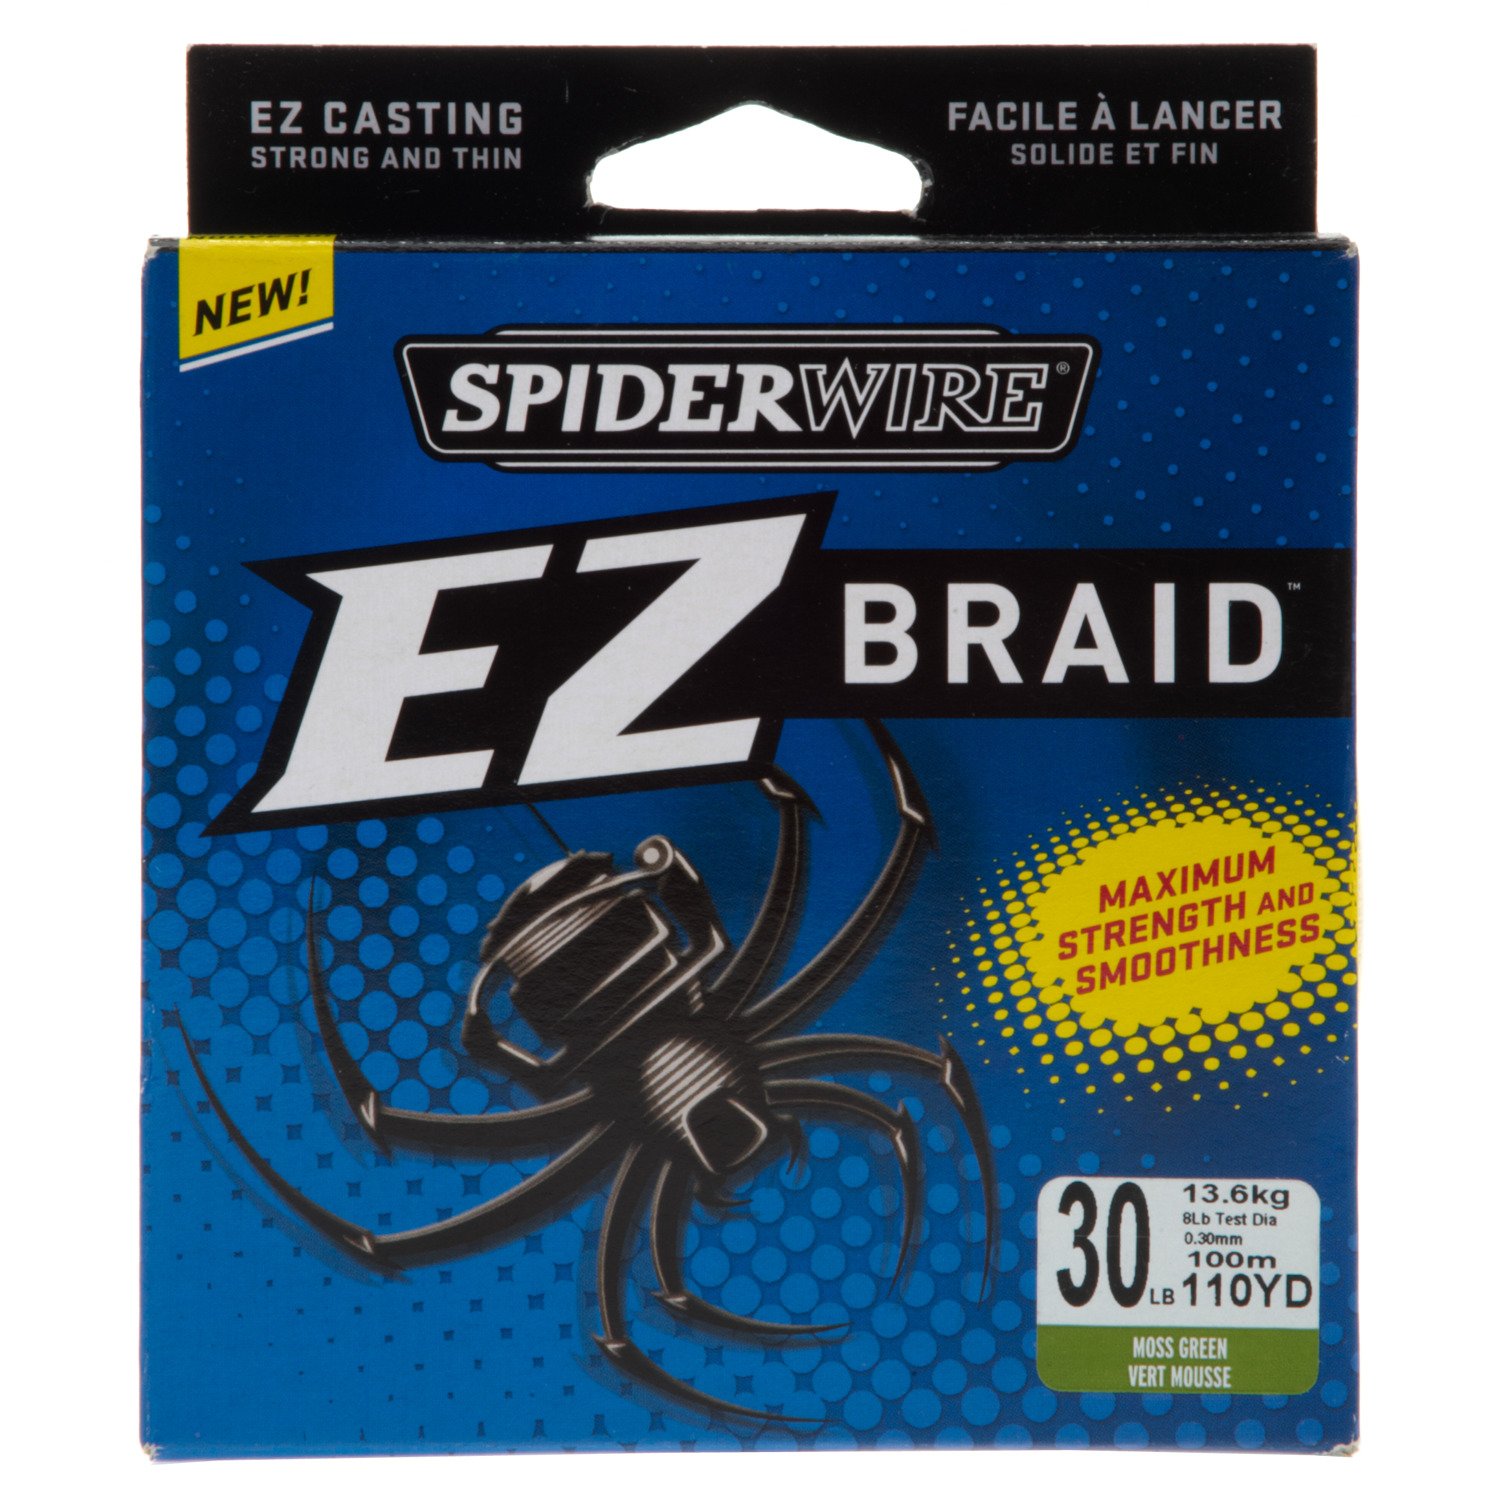 Spiderwire EZ Braid 30 lb - 110 yards Braided Fishing Line